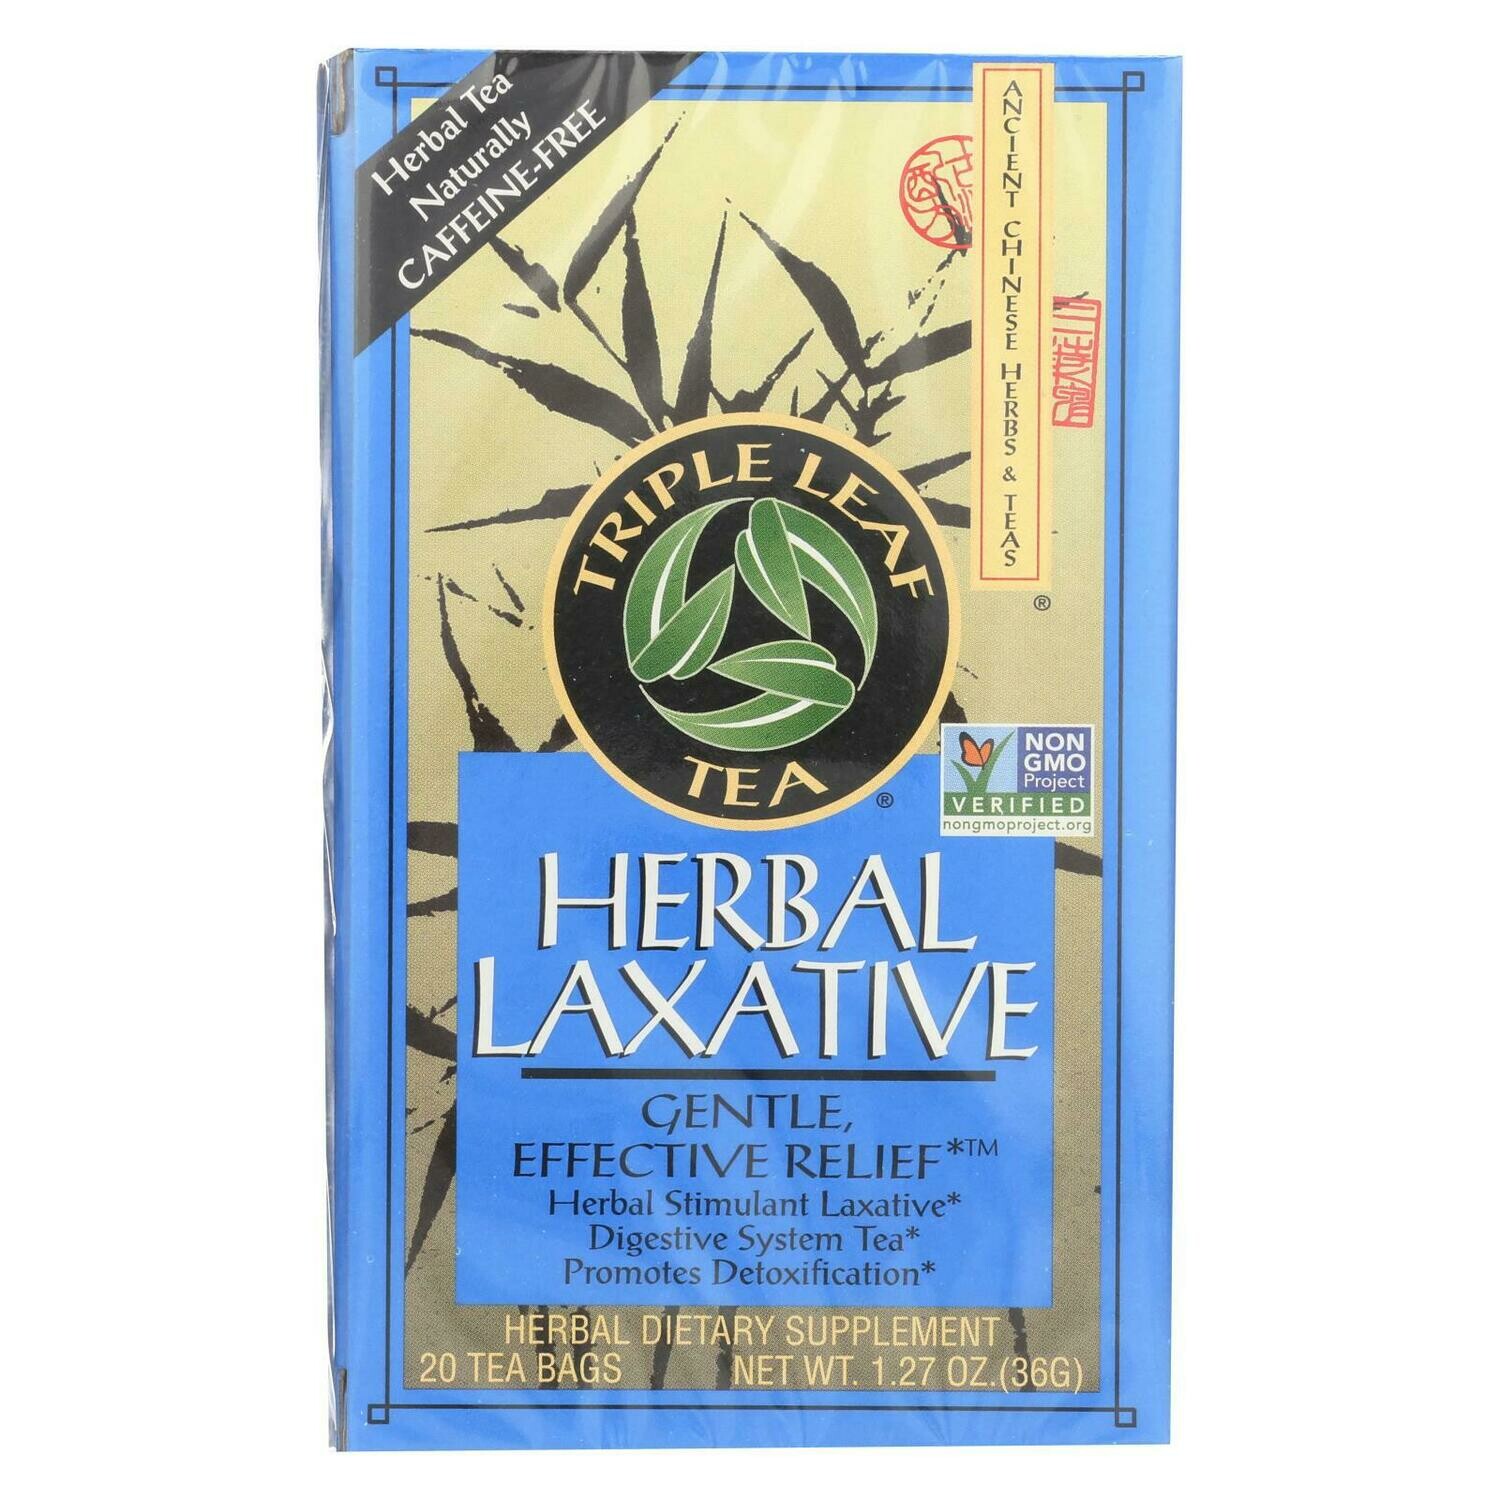 Triple Leaf Tea Herbal Laxative 20 Tea Bags Case Of 6